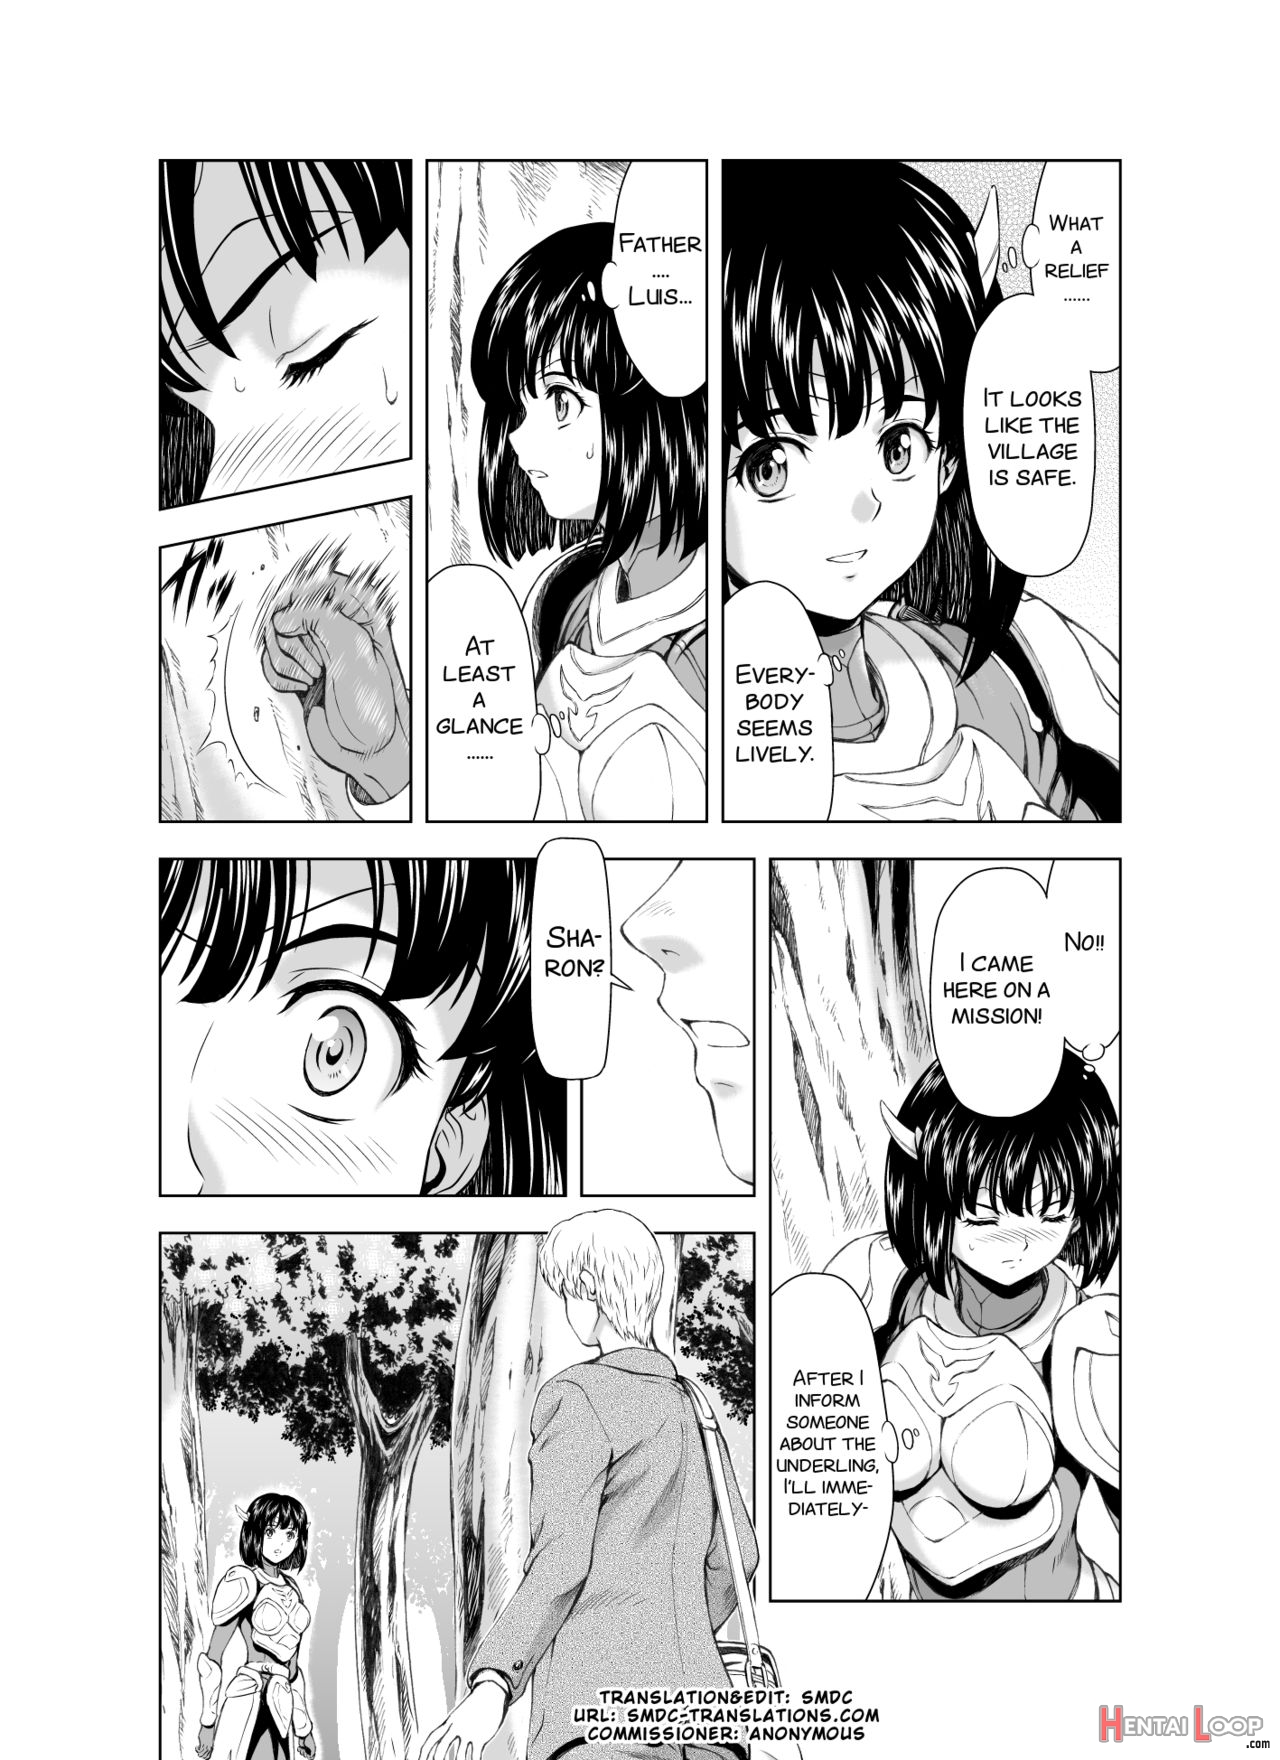 Reties No Michibiki Vol. 3 page 3